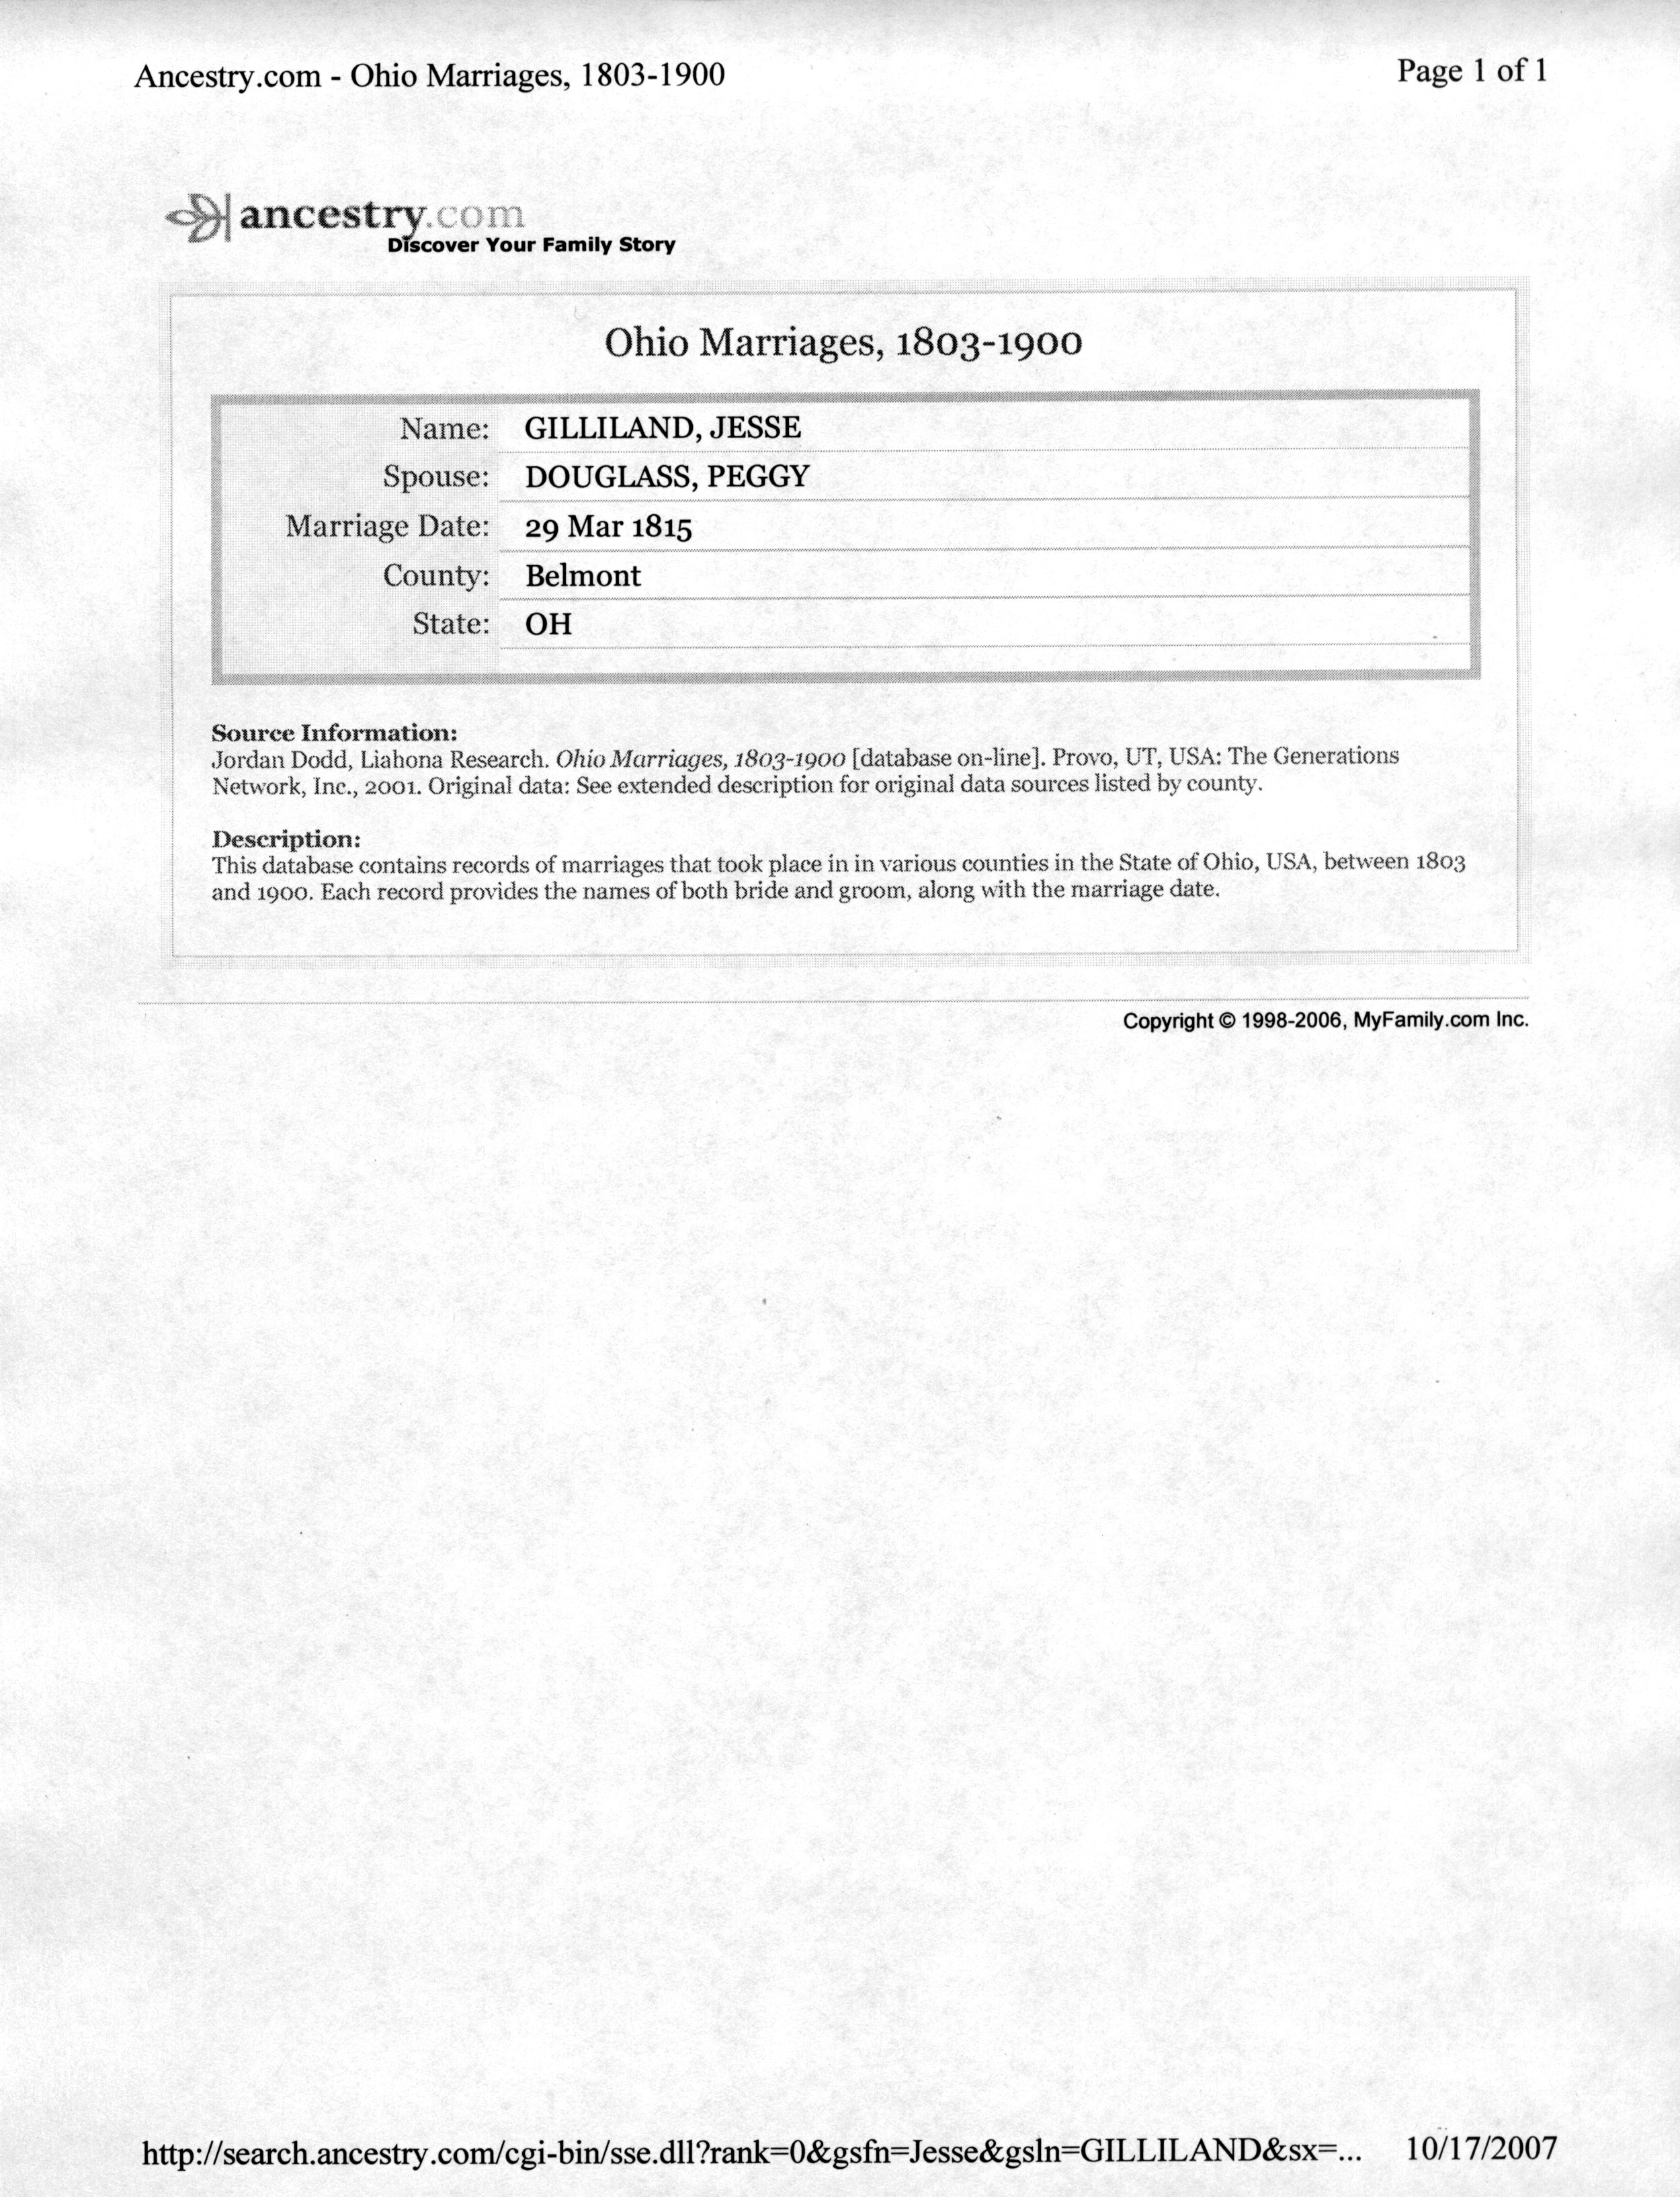 Jesse Gilliland - Ohio Marriage Record.jpg